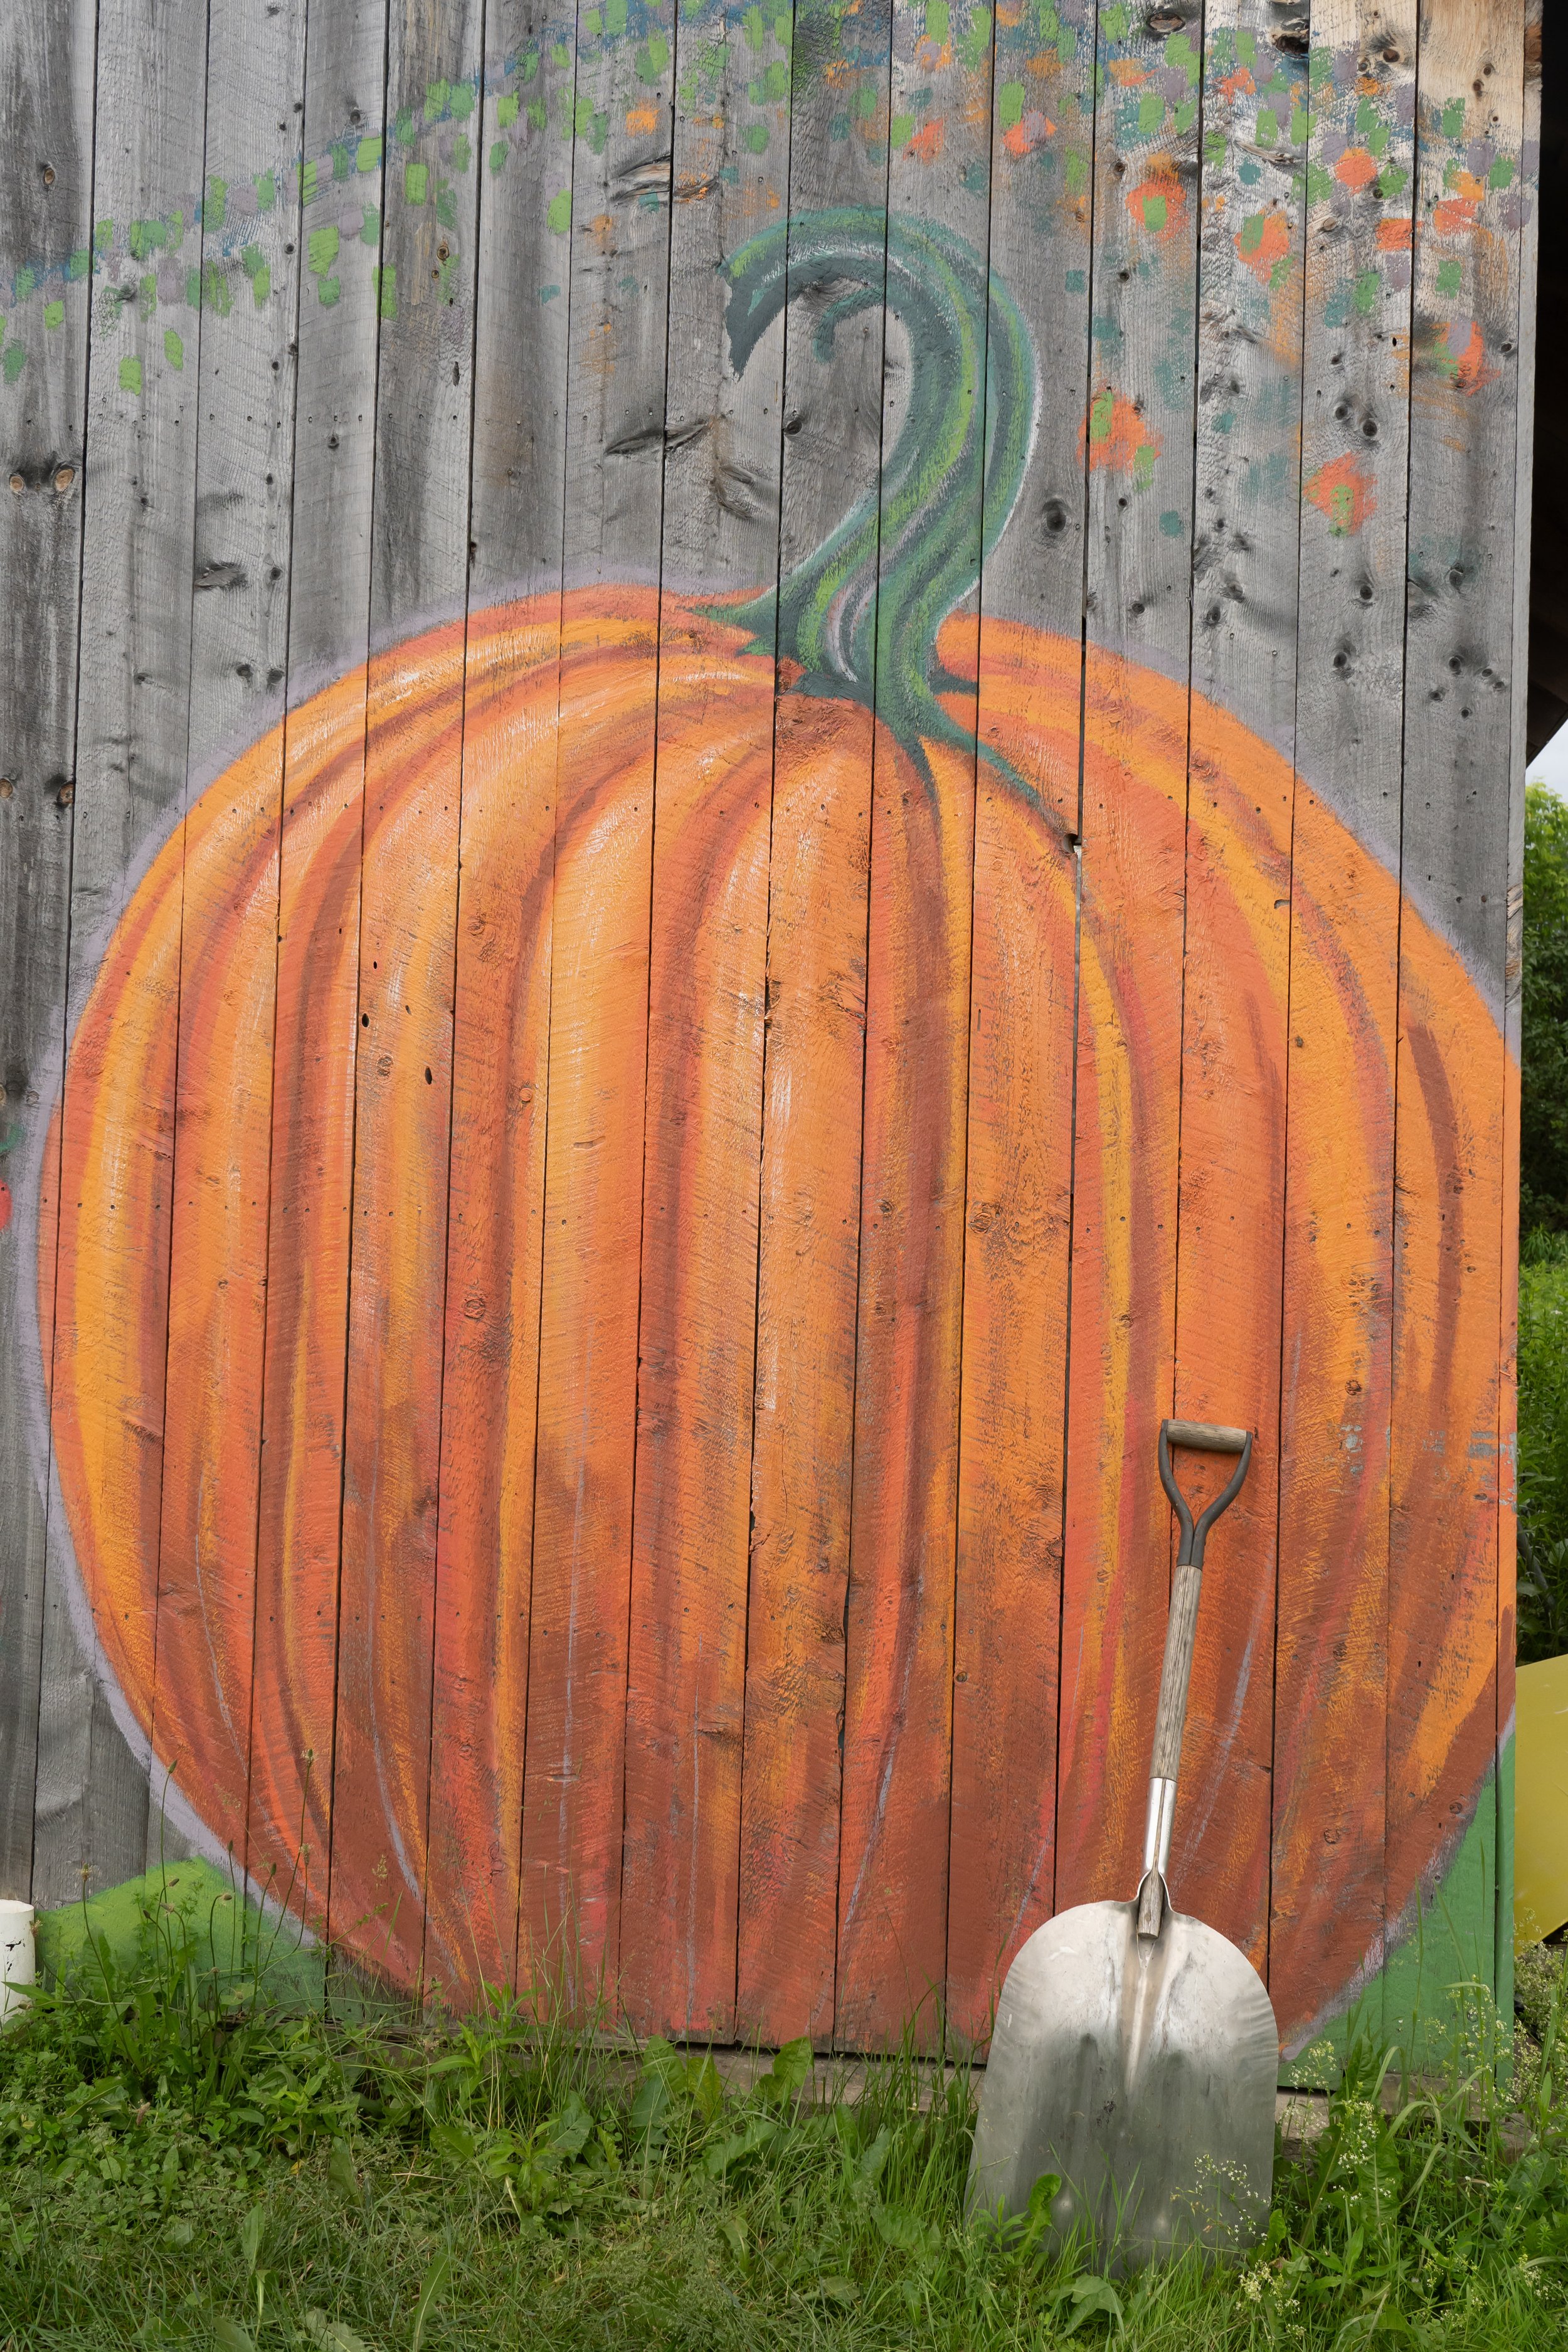 Big Pumpkin Mural at Hartshorn Farm in Vermont